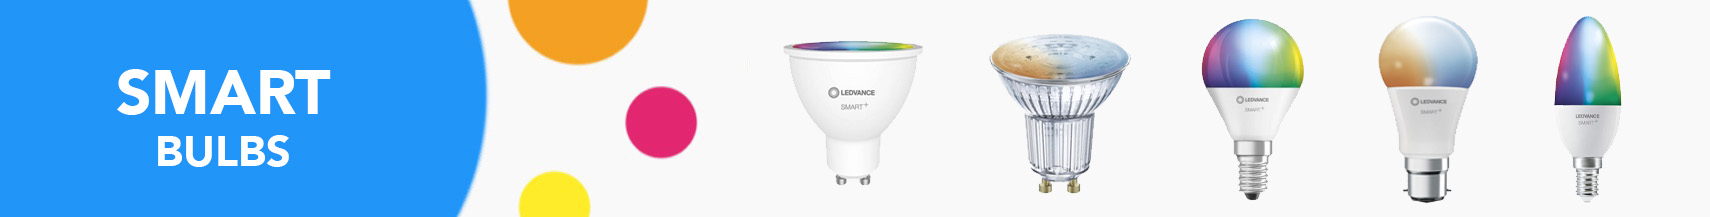 smart_bulbs